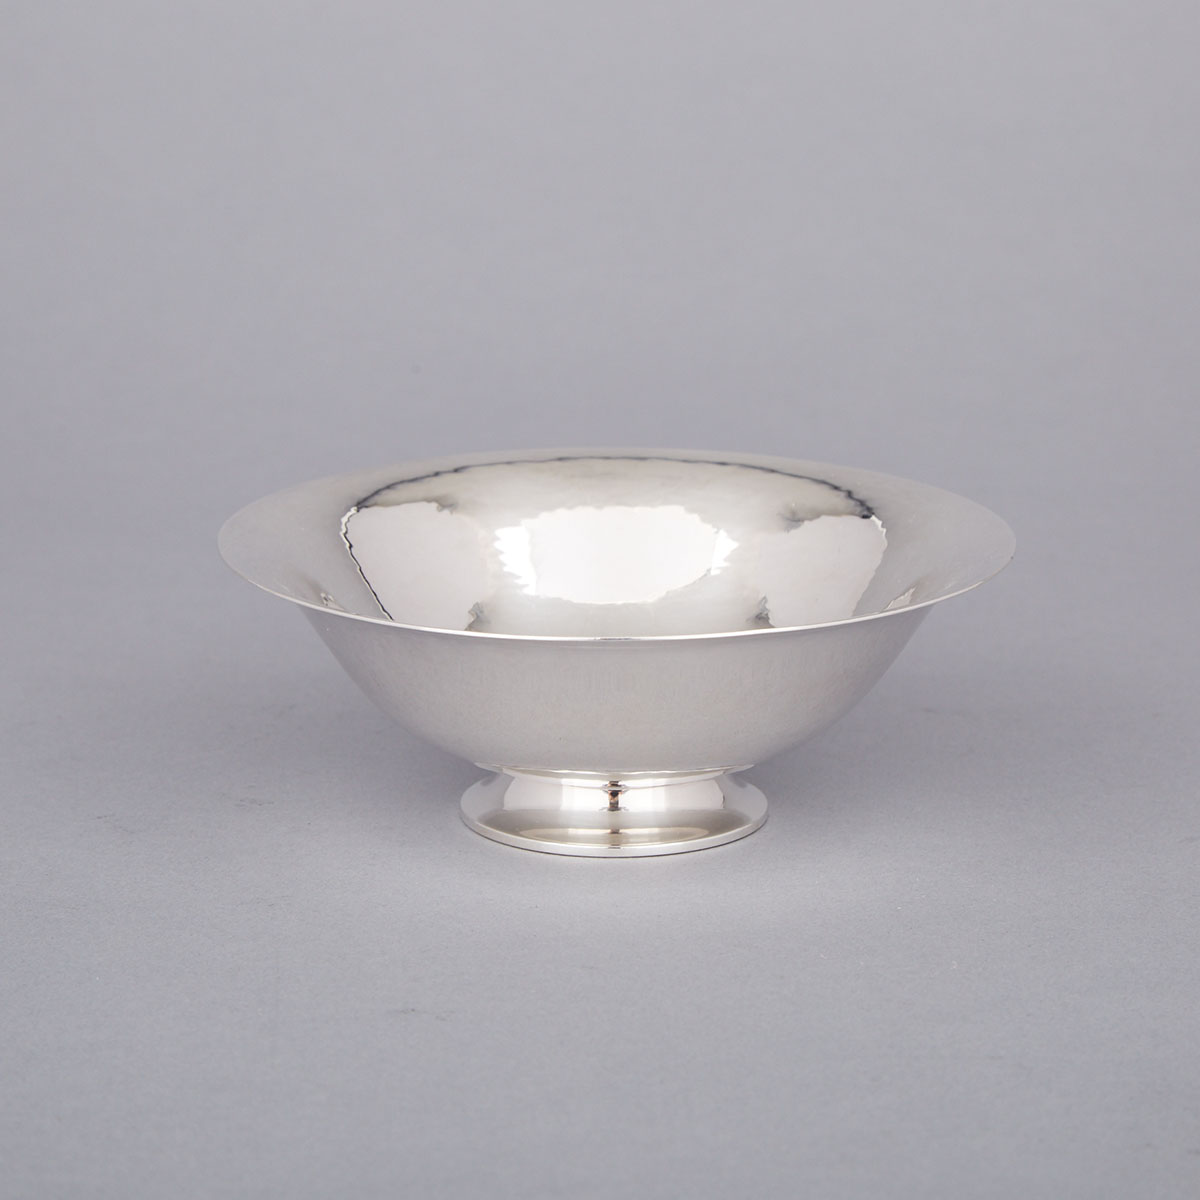 Danish Silver Small Bowl, #575C, Georg Jensen, Copenhagen, post-1945